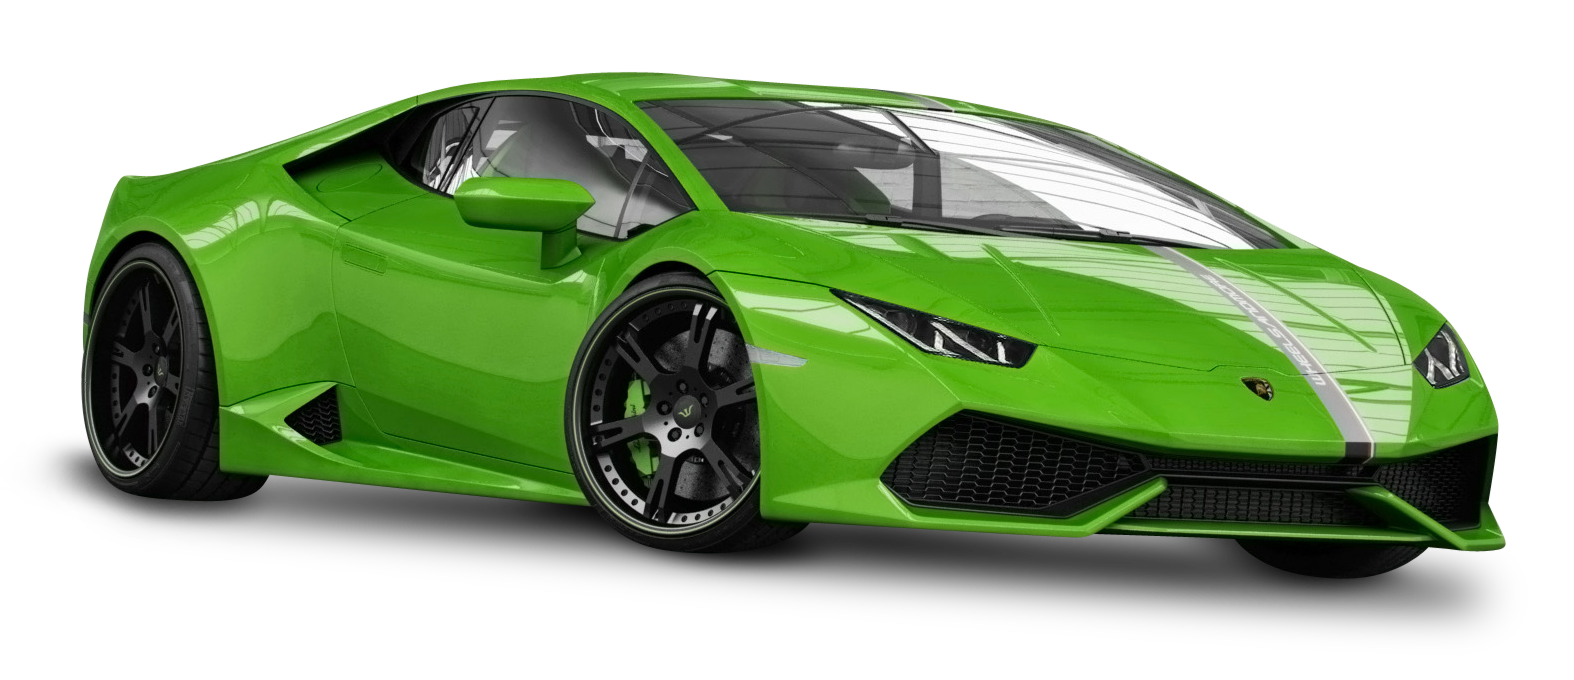 Green Lamborghini Huracan Car PNG Image - PurePNG | Free ...